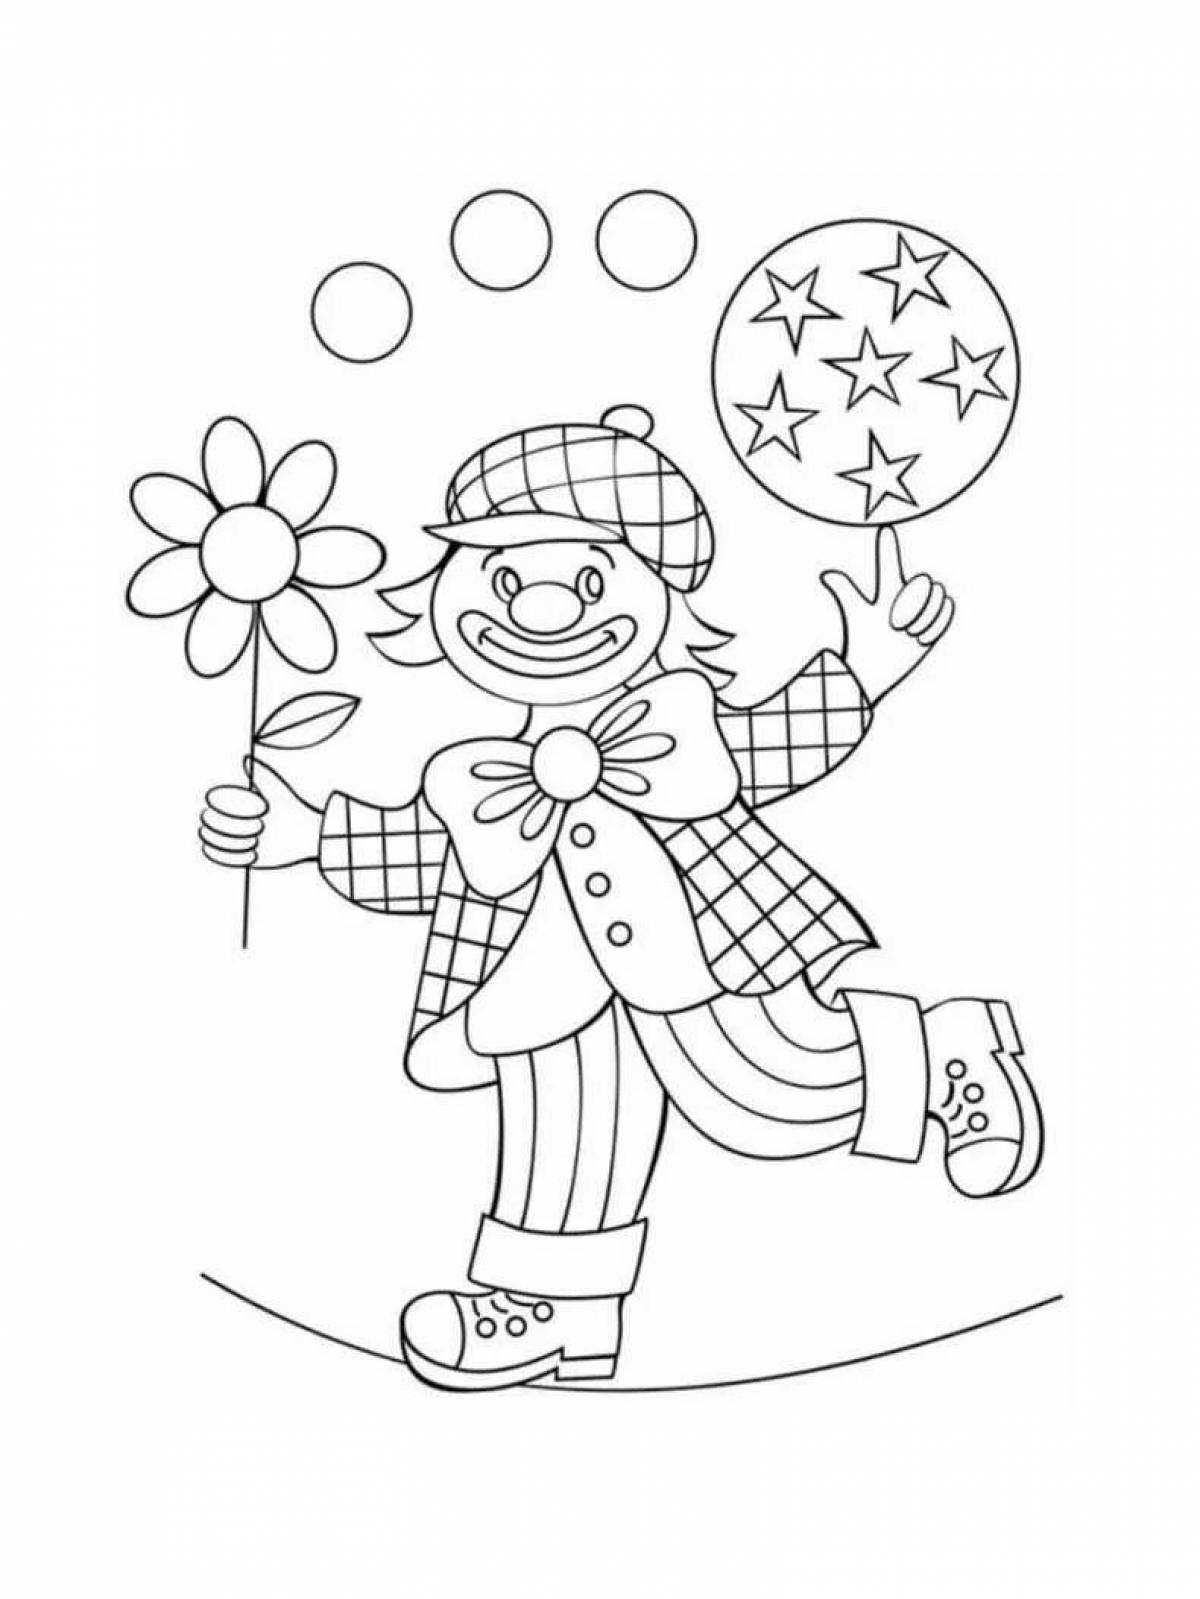 Coloring book funny clown for preschoolers